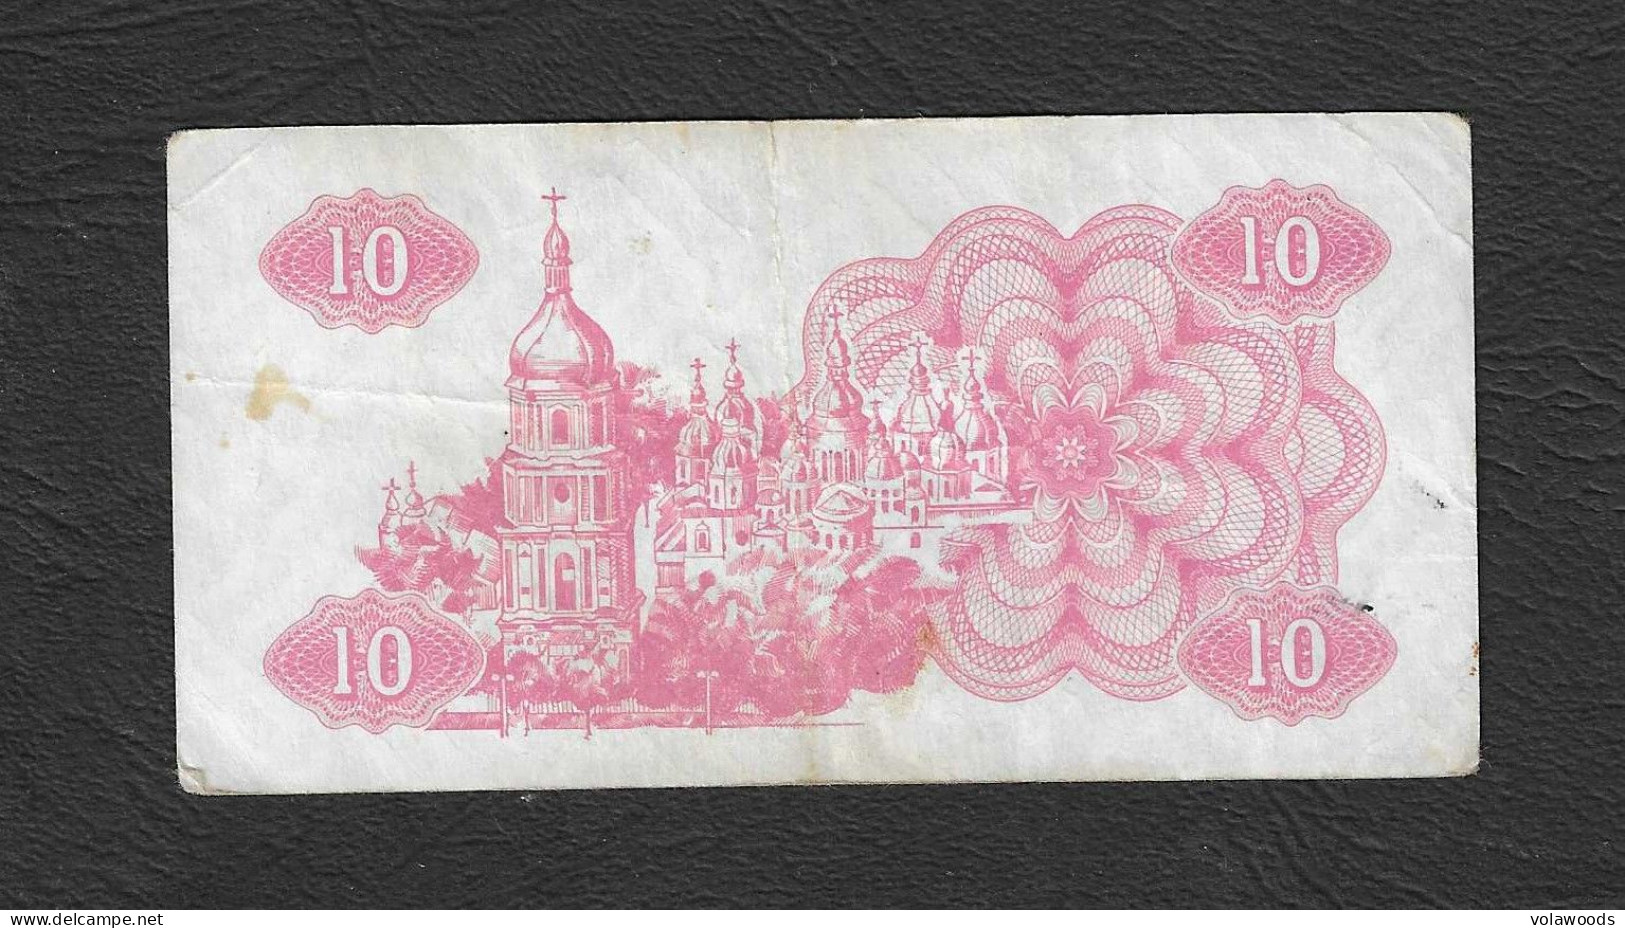 Ucraina - Banconota Circolata Da 10 Karbovantes P-84a - 1991 #19 - Ukraine